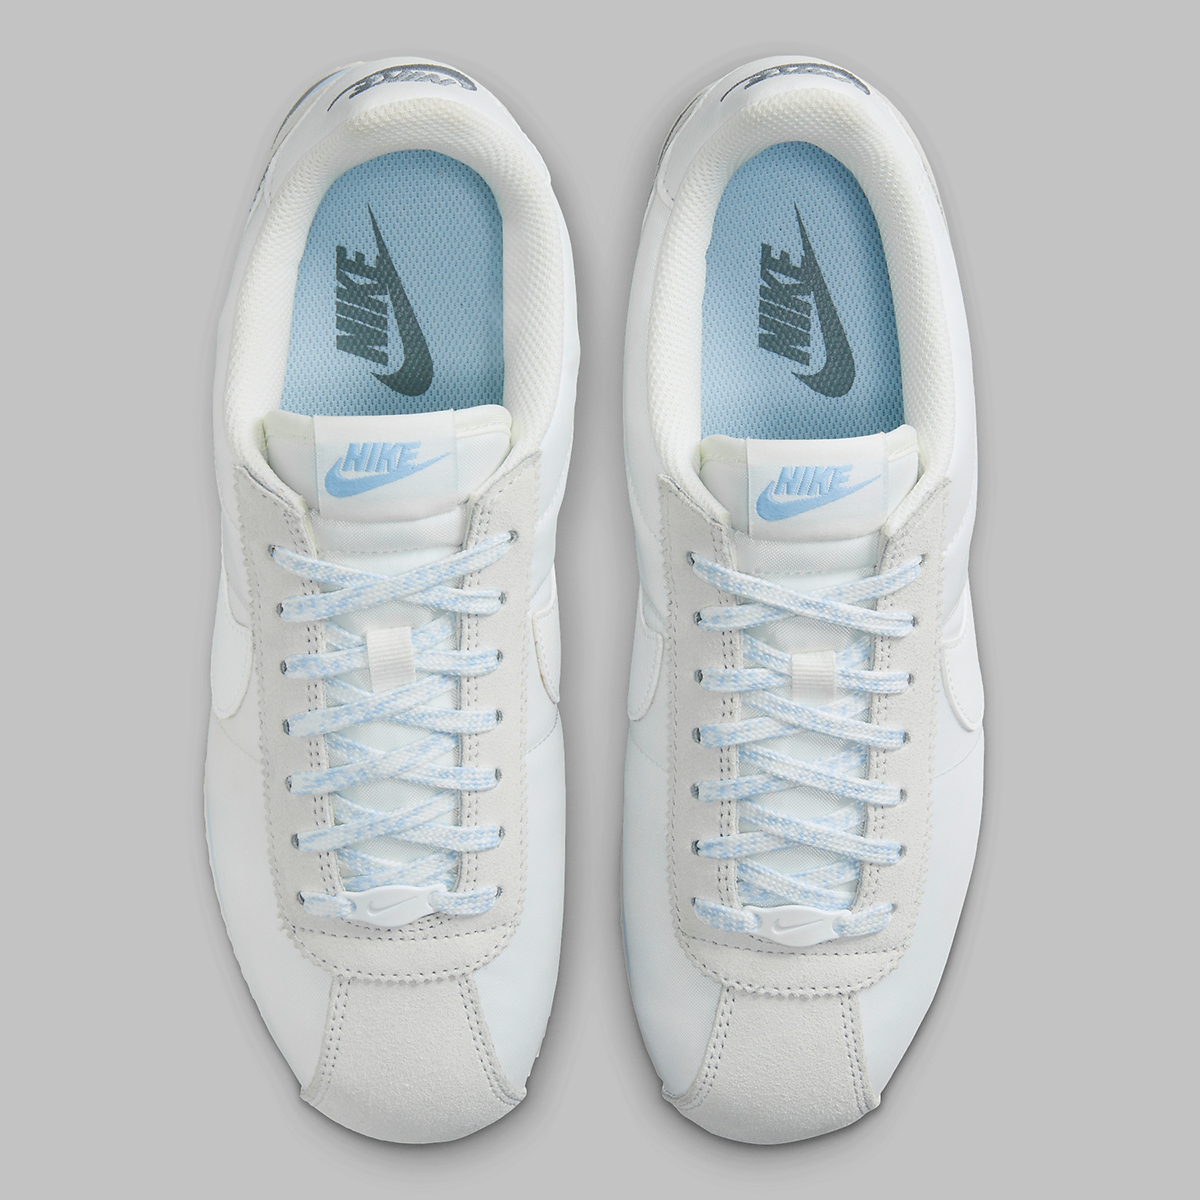 Nike Cortez White Glacier Blue Cool Grey Hf6410 101 7